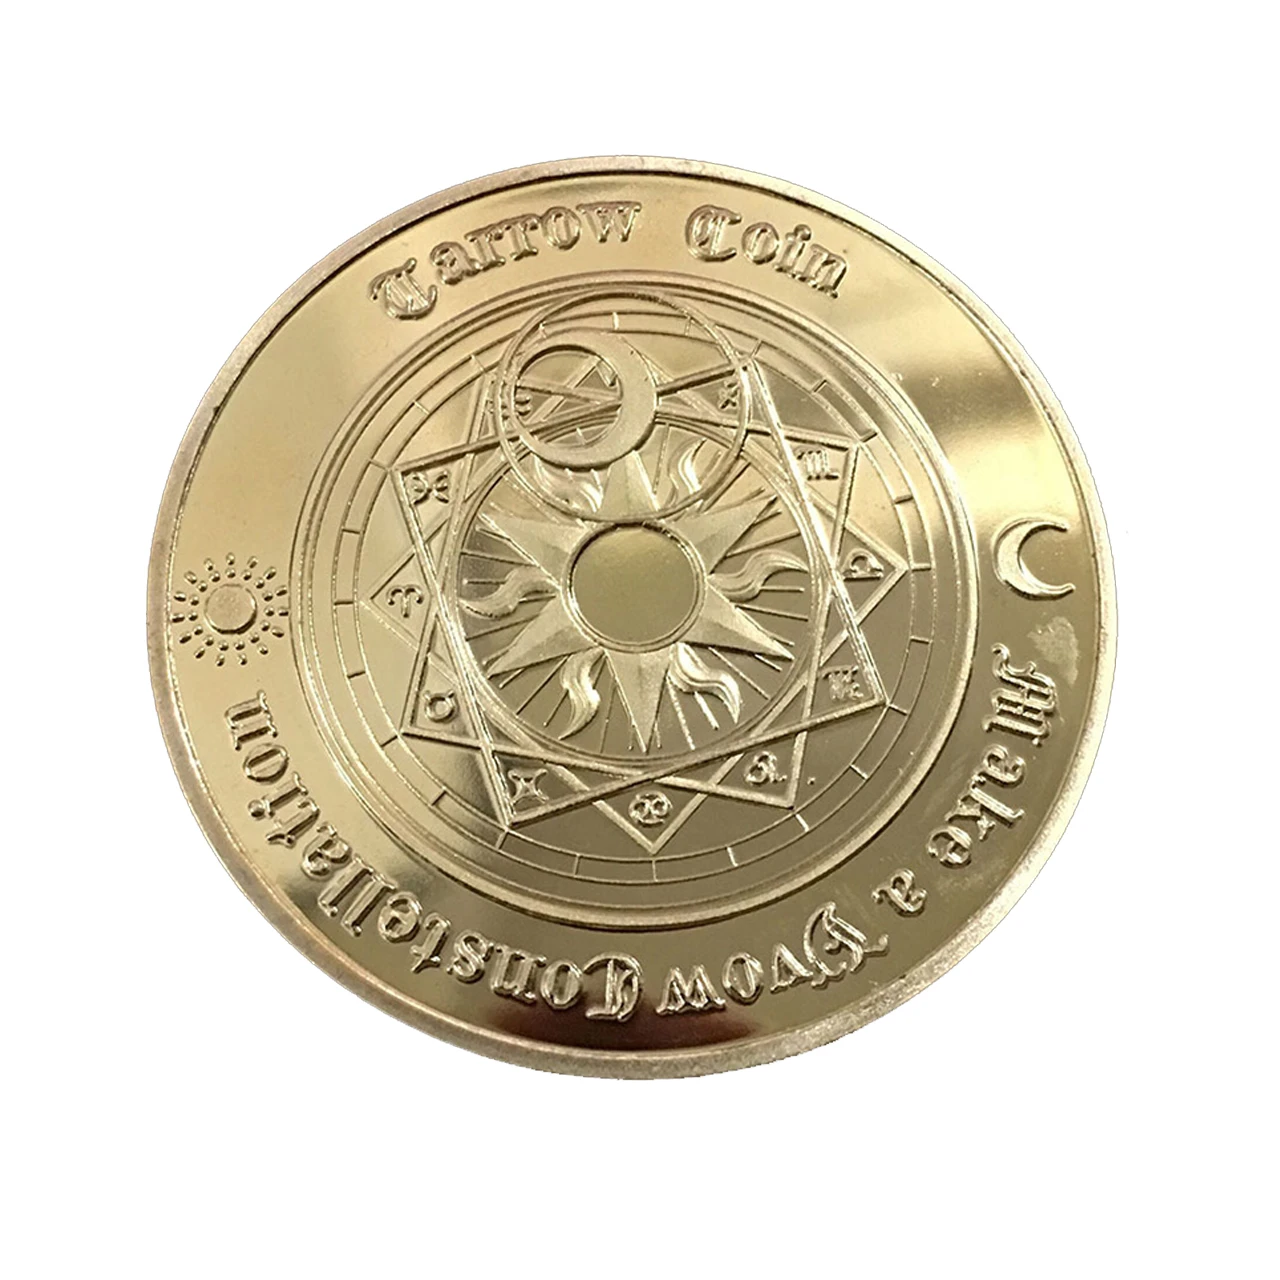 Lucky Tarot Coin Art Metal Craft Divination Sun Moon Constellation Challenge Coin Feng Shui Coins Collectibles Gift